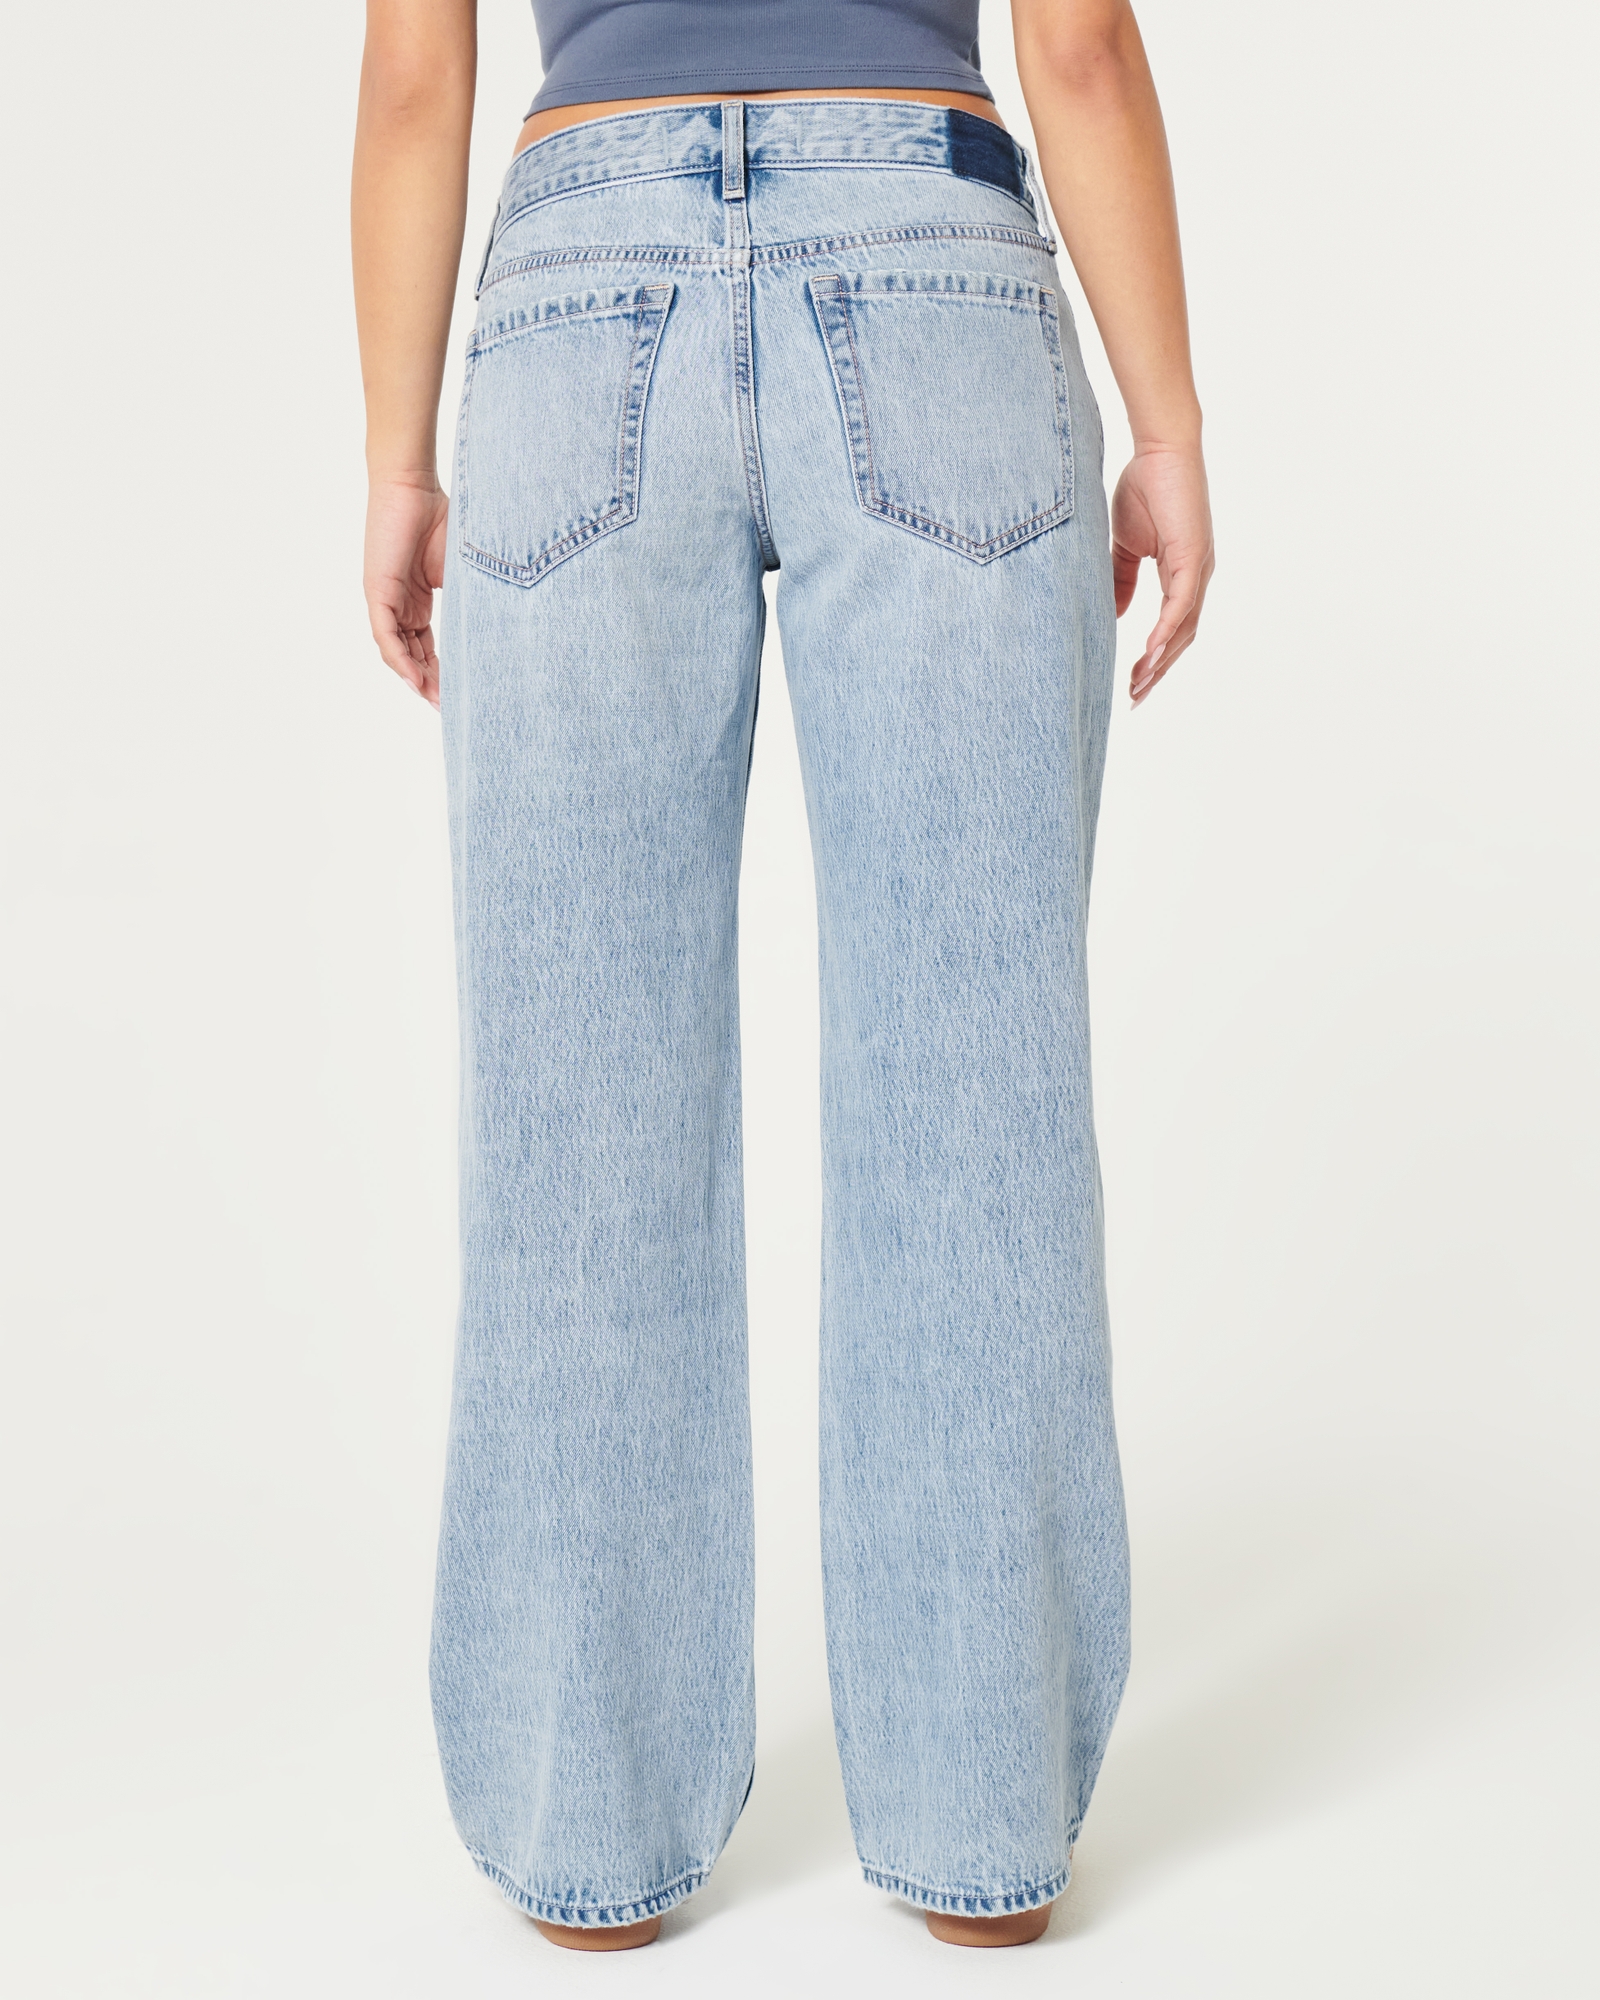 Loose Cargo Women's Jeans - Medium Wash